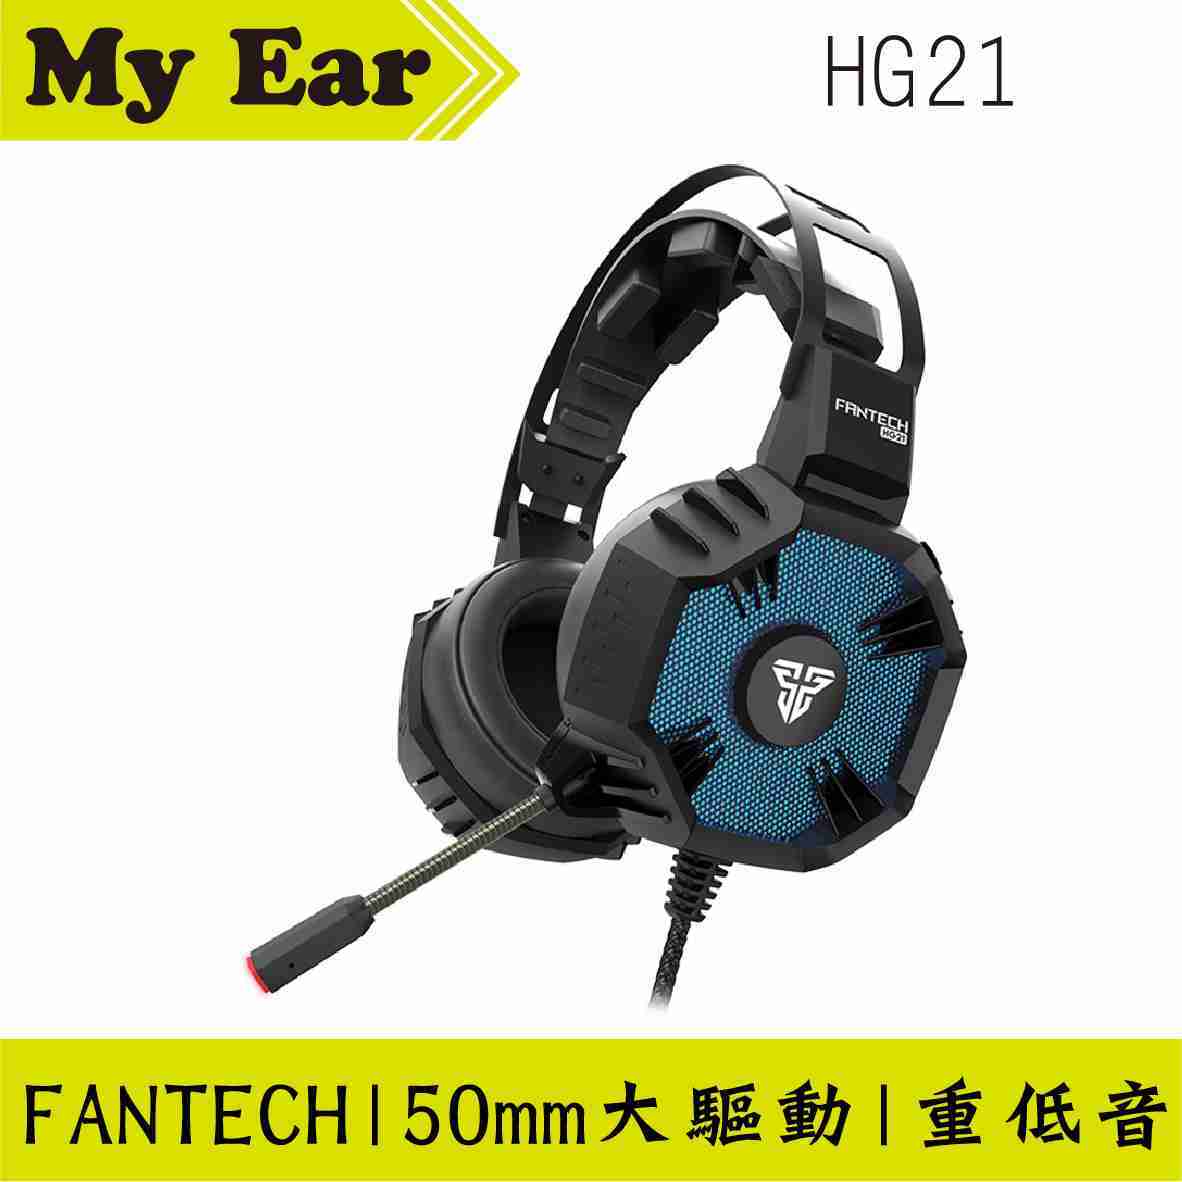 FANTECH HG21 7.1聲道 RGB 電競耳罩式耳機 | My Ear耳機專門店